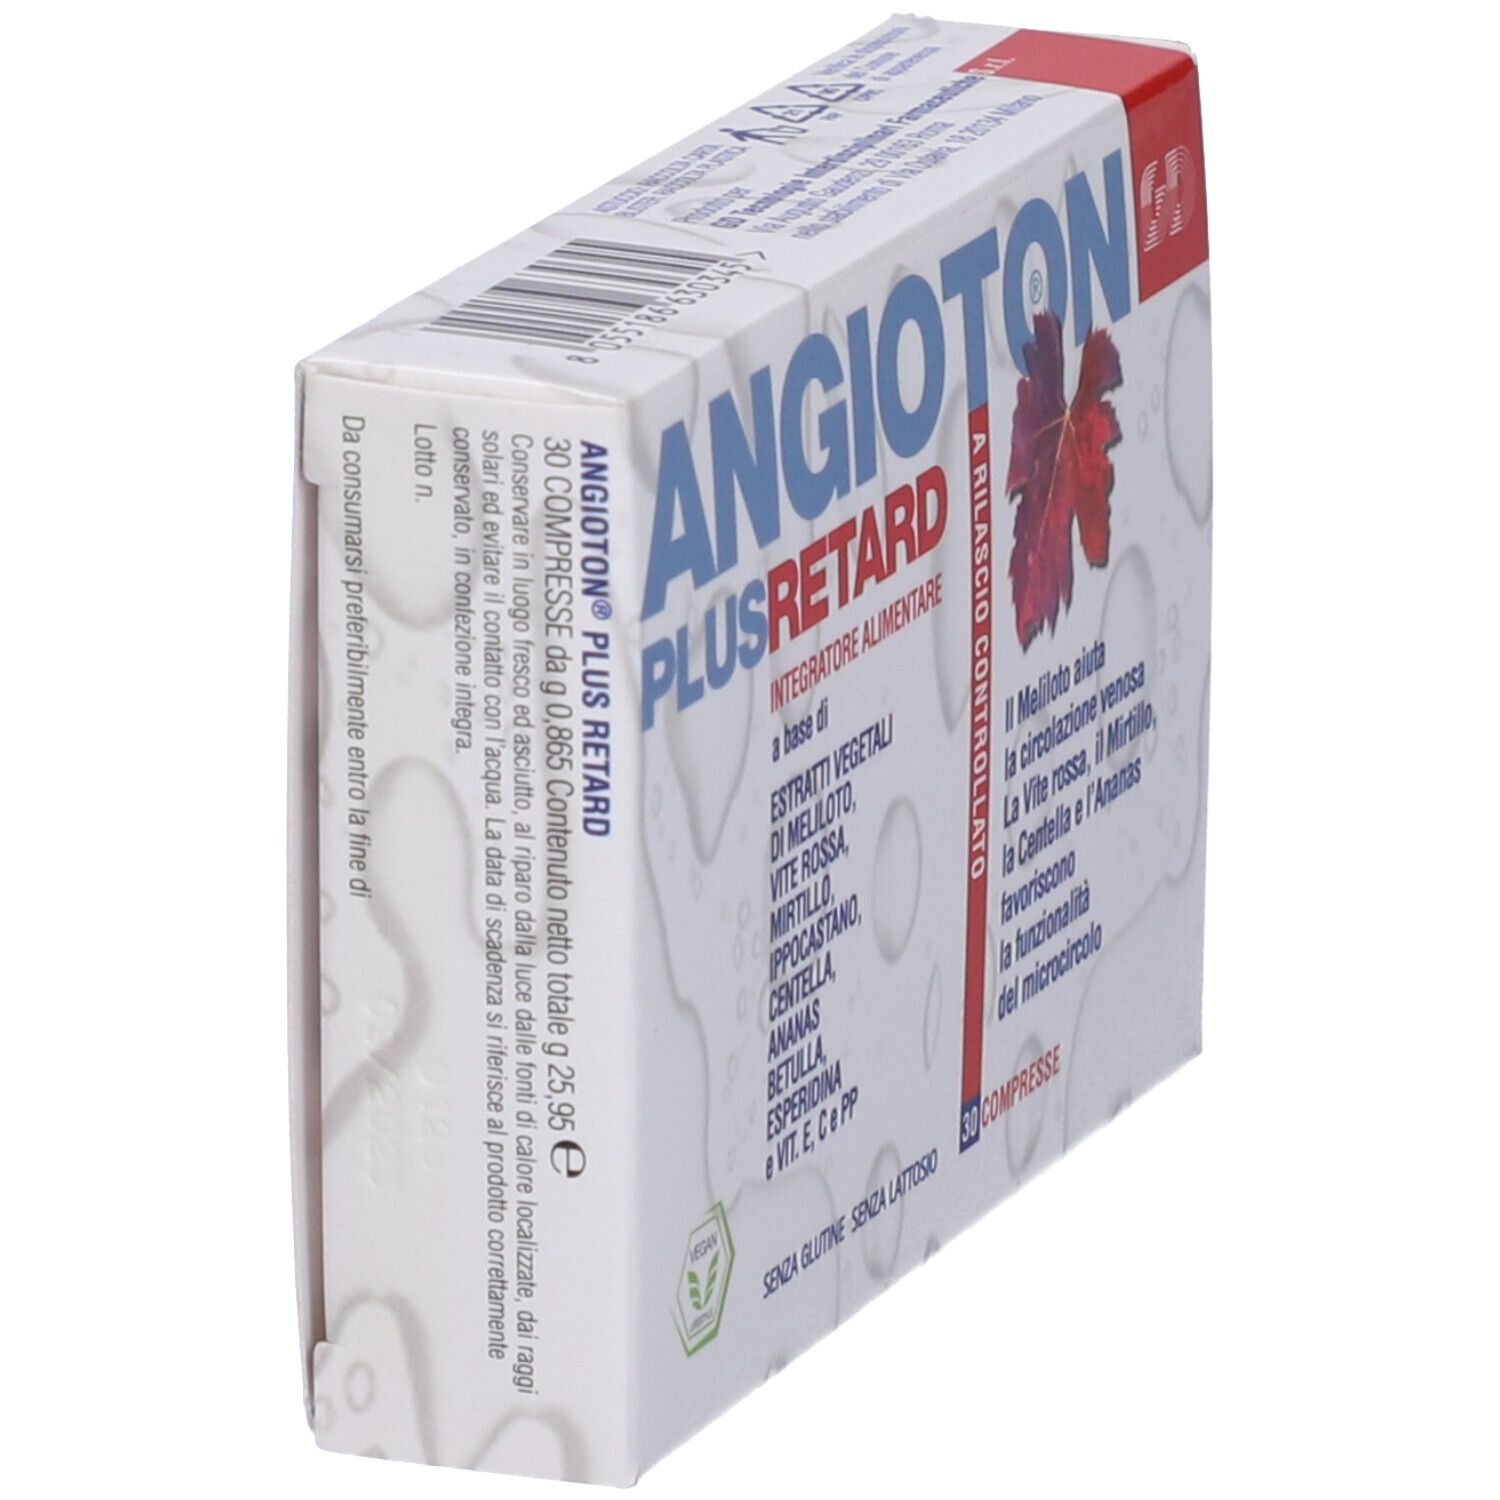 Angioton® Plus Retard